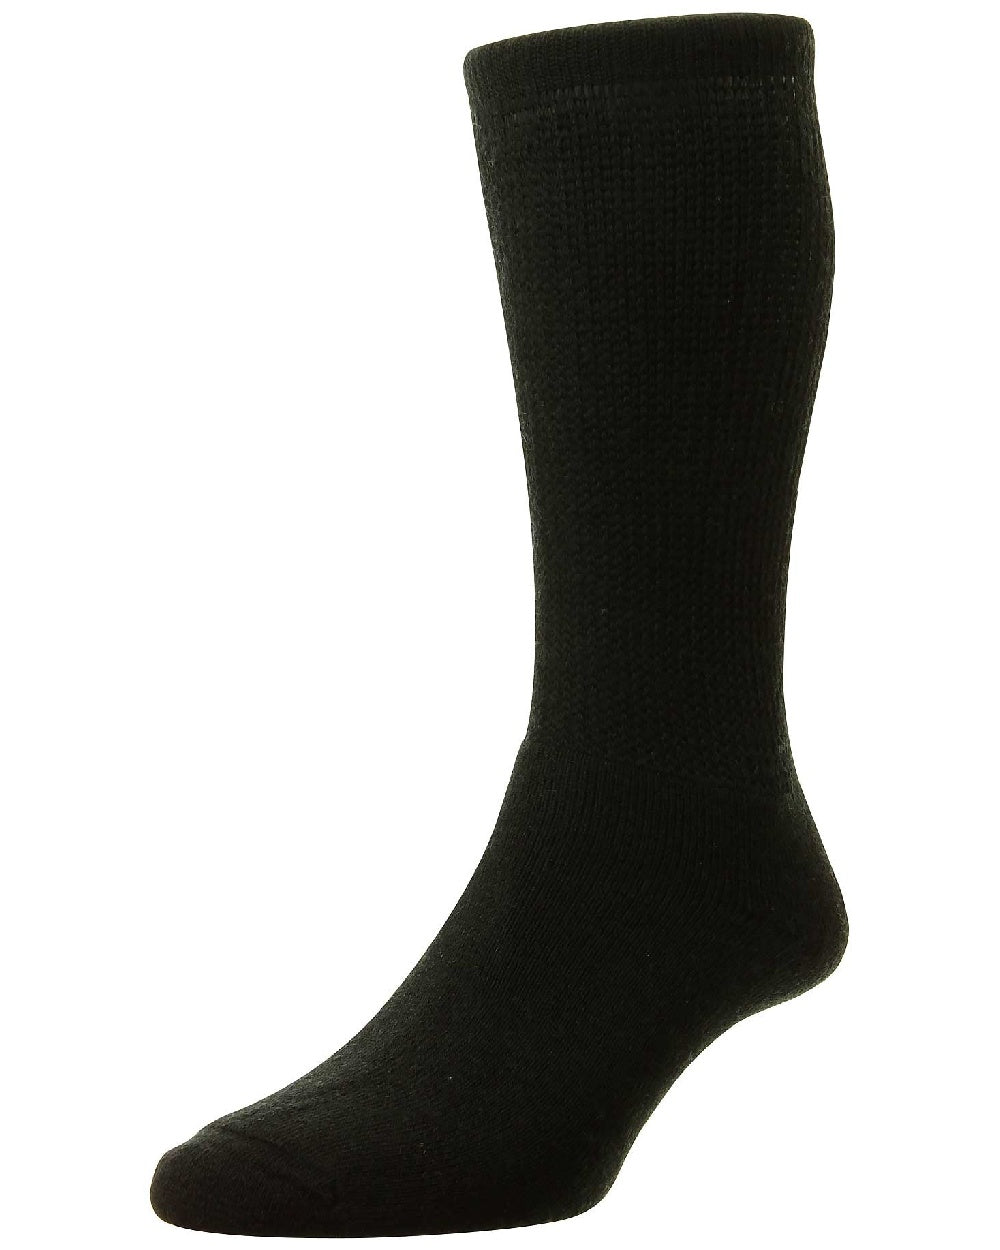 Black coloured HJ Hall Diabetic Wool Socks on white background 